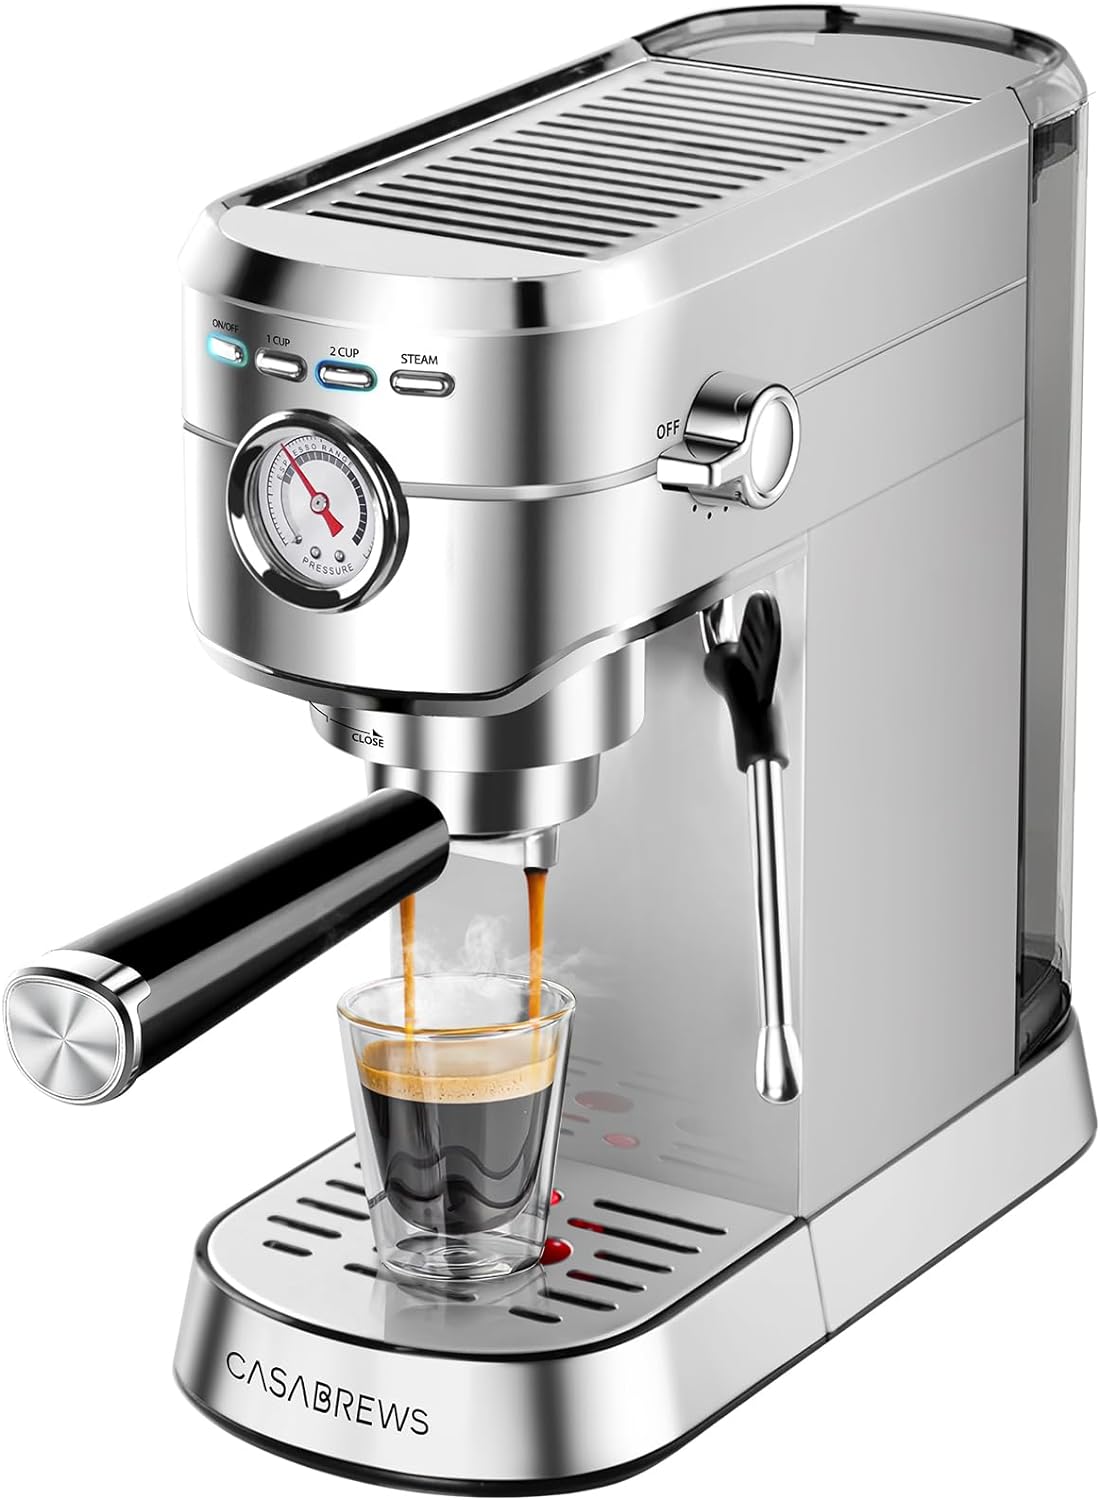 CASABREWS Espresso Machine